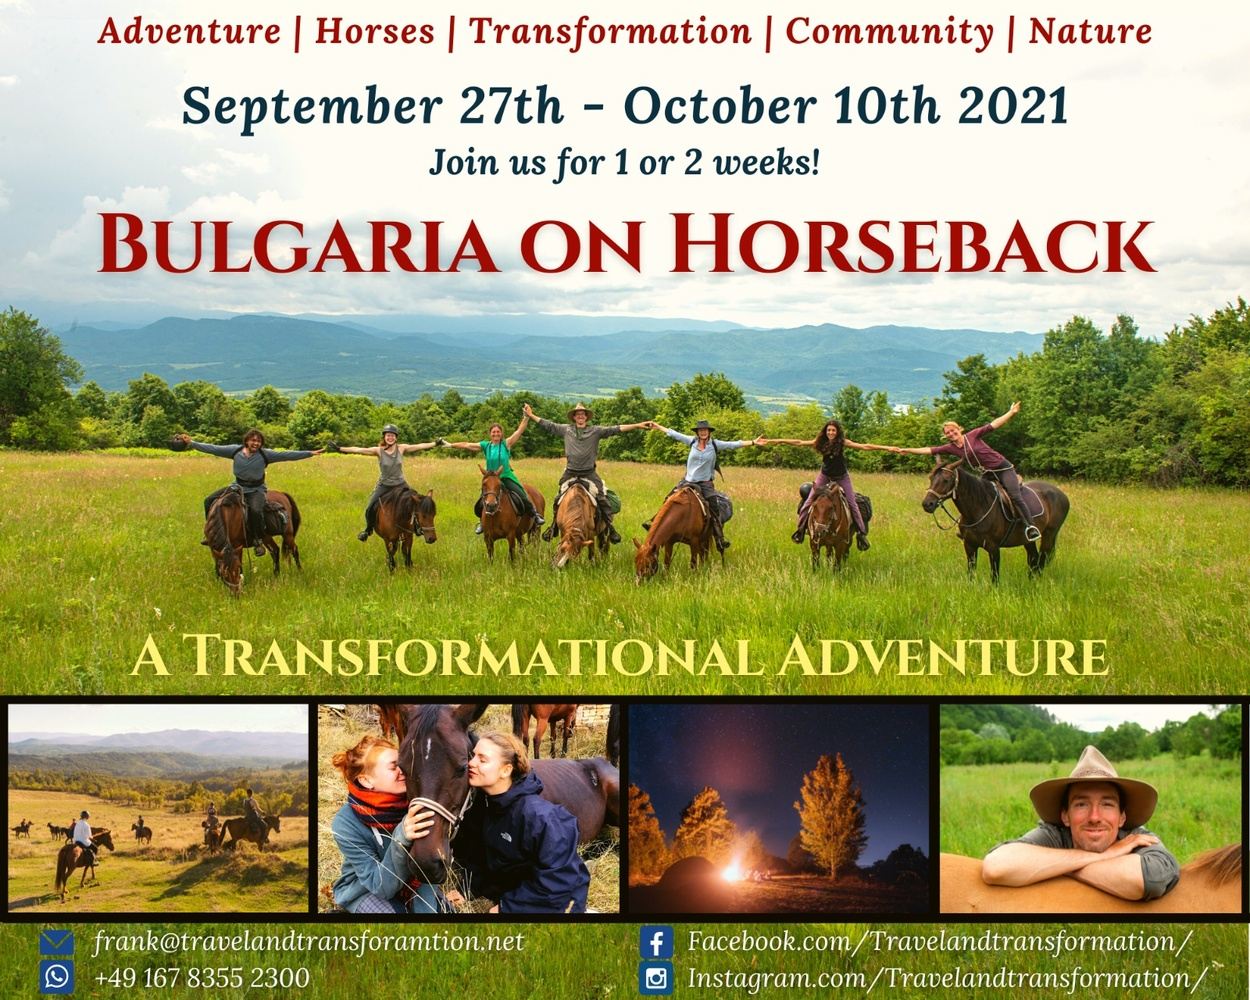 With Horses Through Bulgaria - A Transformational Adventure